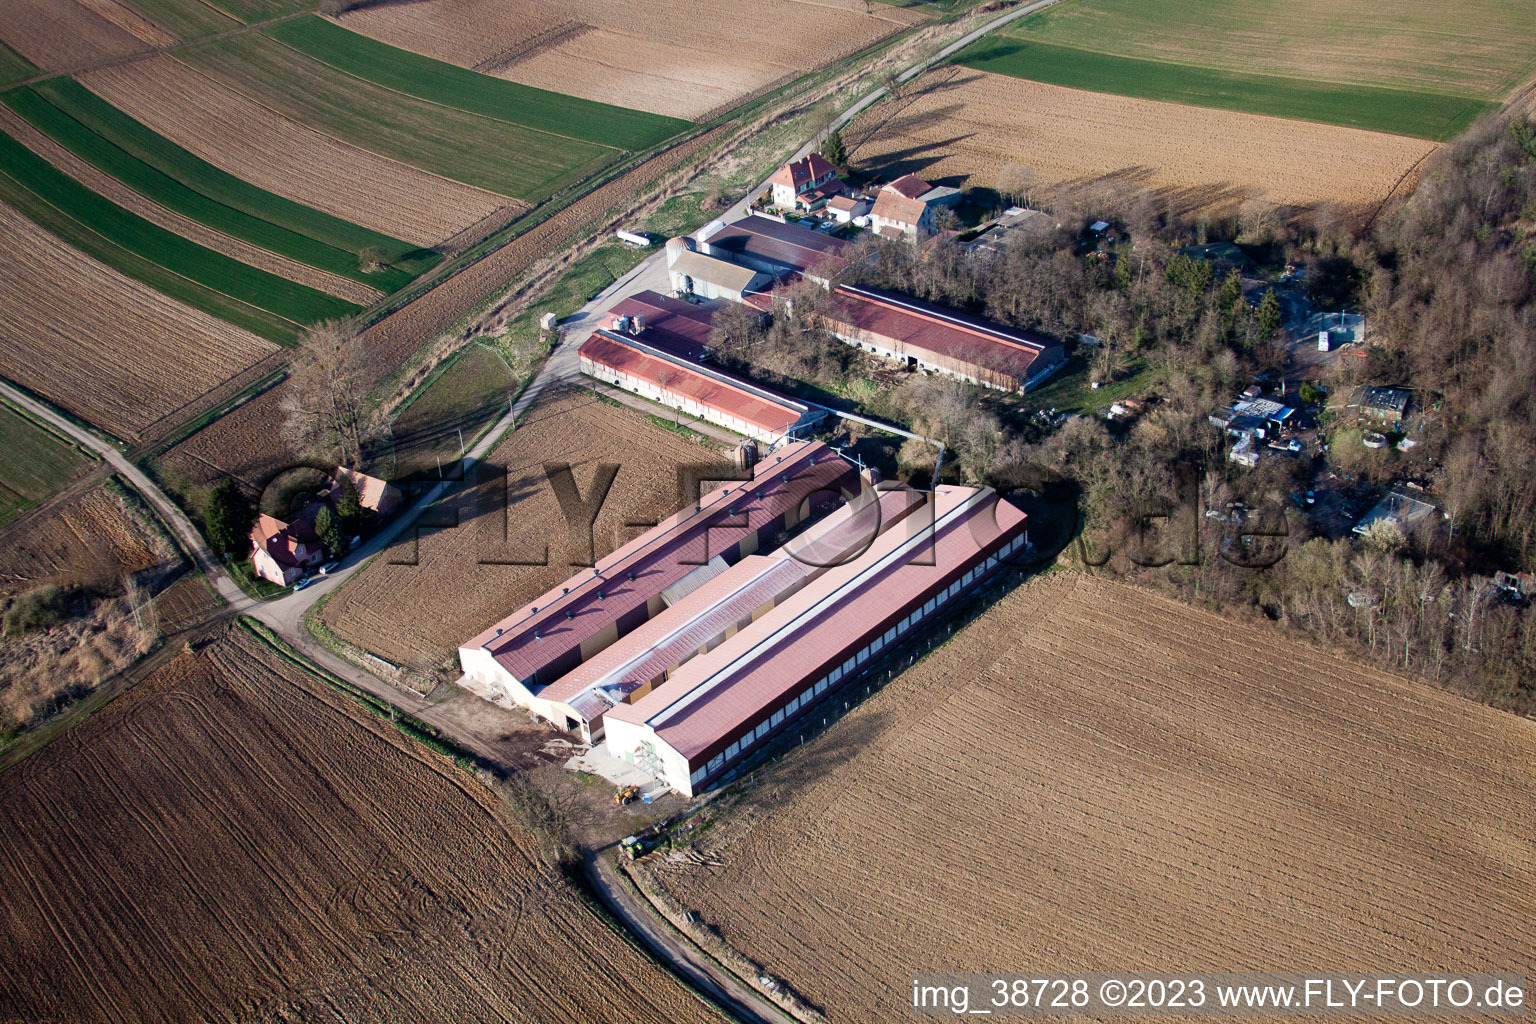 Merkwiller-Pechelbronn in the state Bas-Rhin, France from the drone perspective